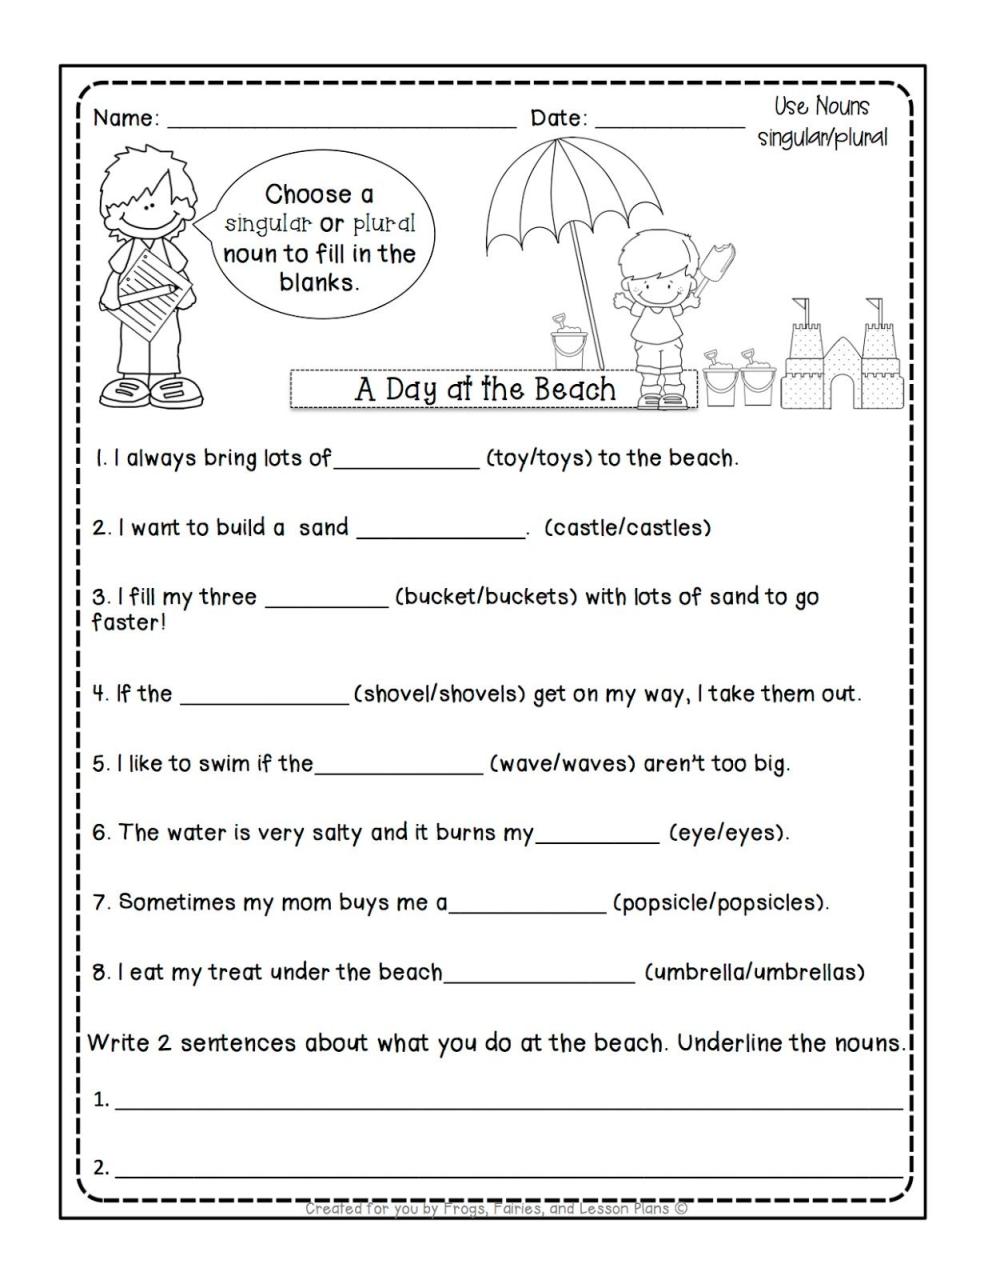 Plural Nouns Worksheet For Grade 2